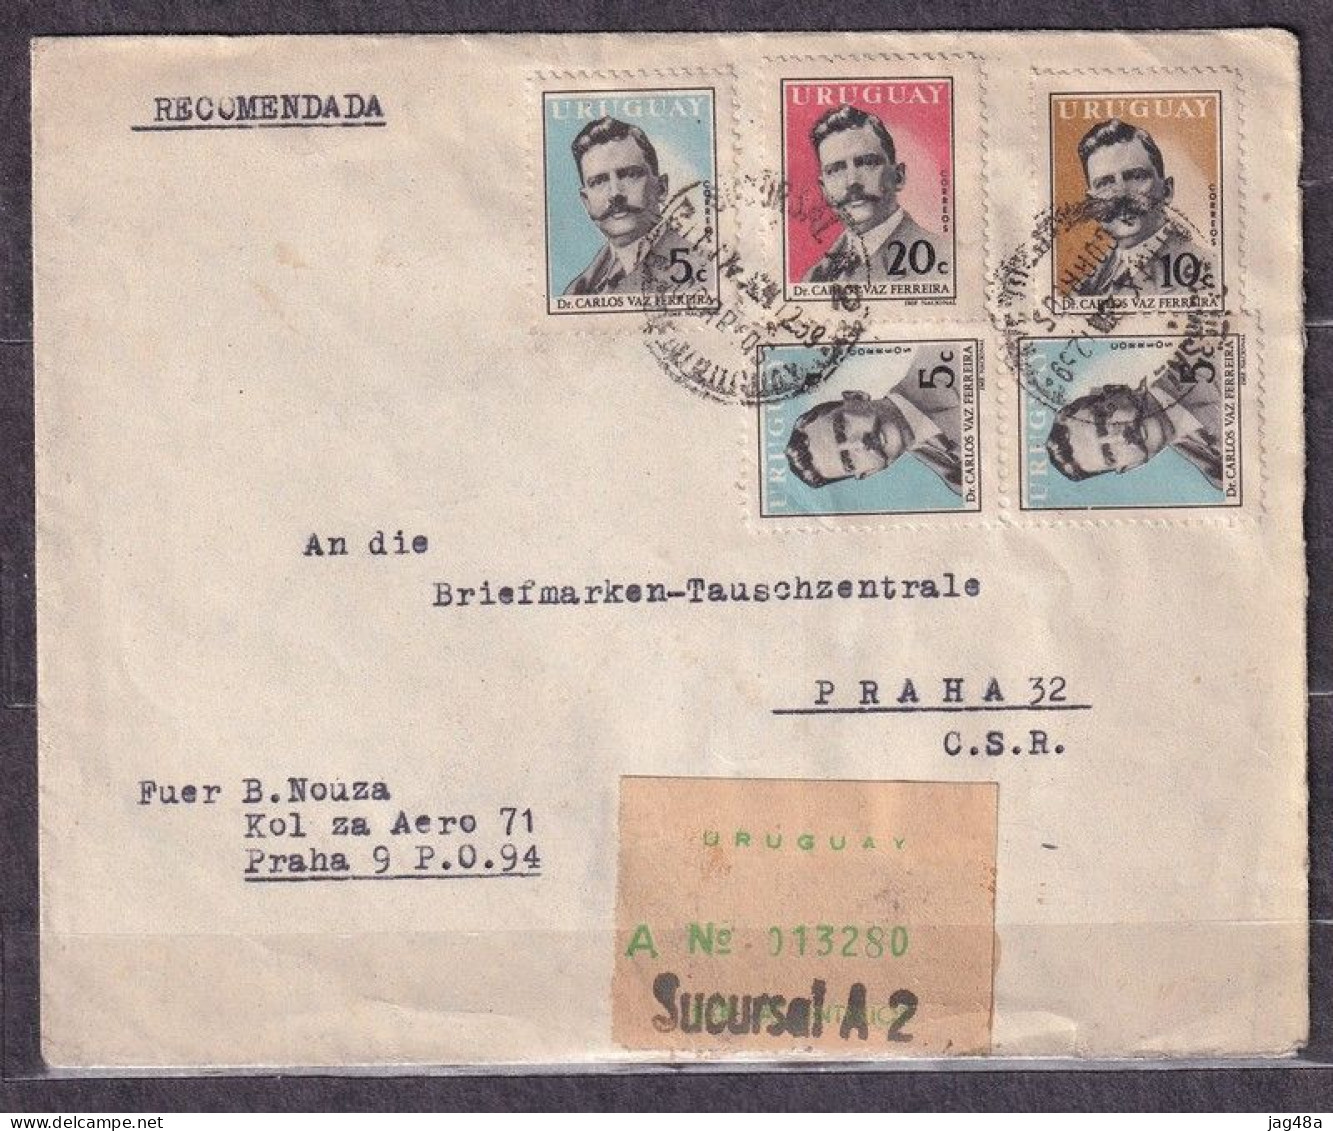 URUGUAY. 1930/Sucursal, Registered Letter/mixed Franking Envelope. - Uruguay